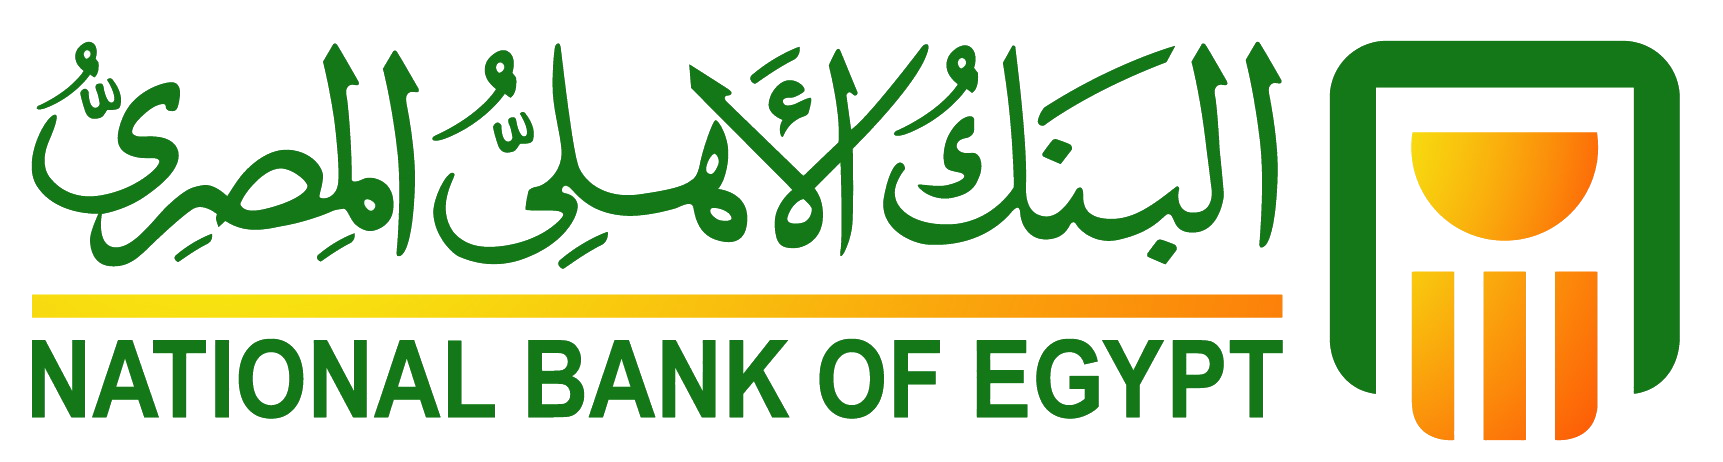 National Bank of Egypt Brand Logo